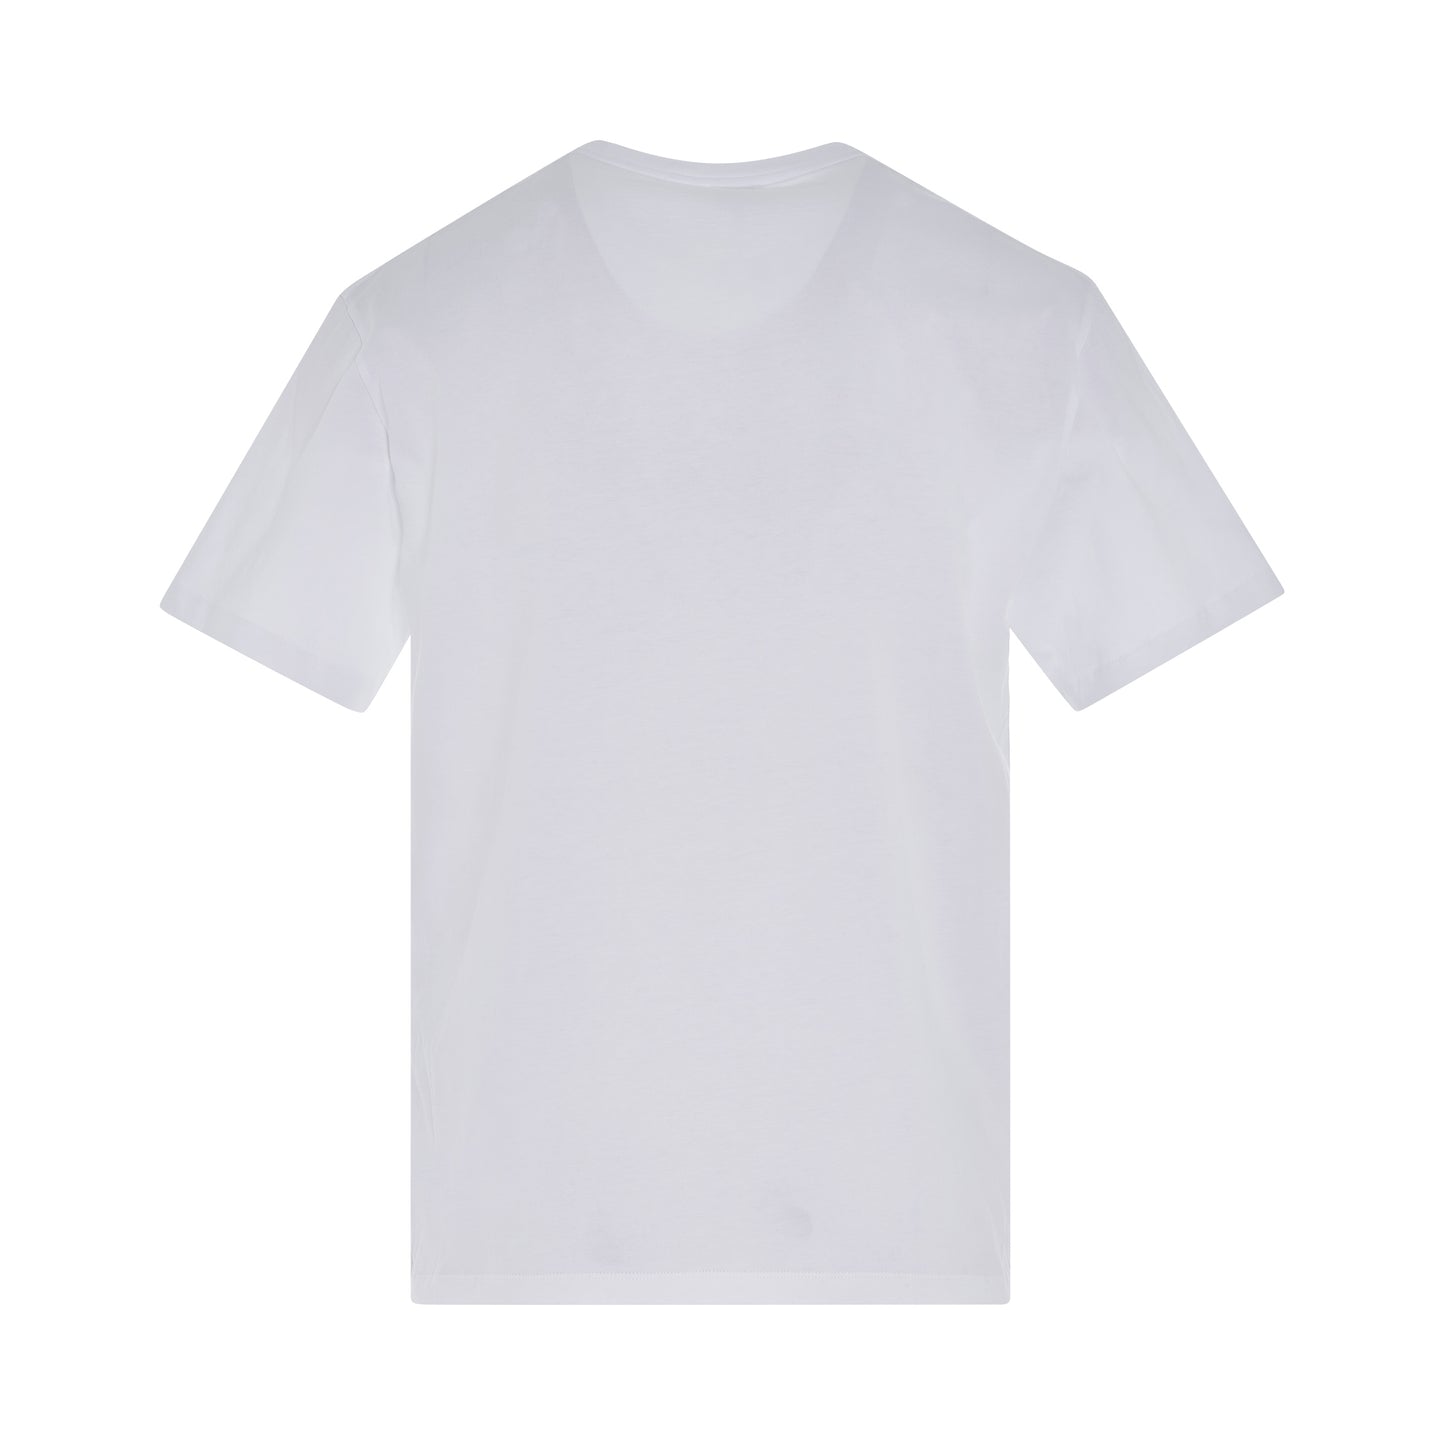 Herbarium T-shirt in White